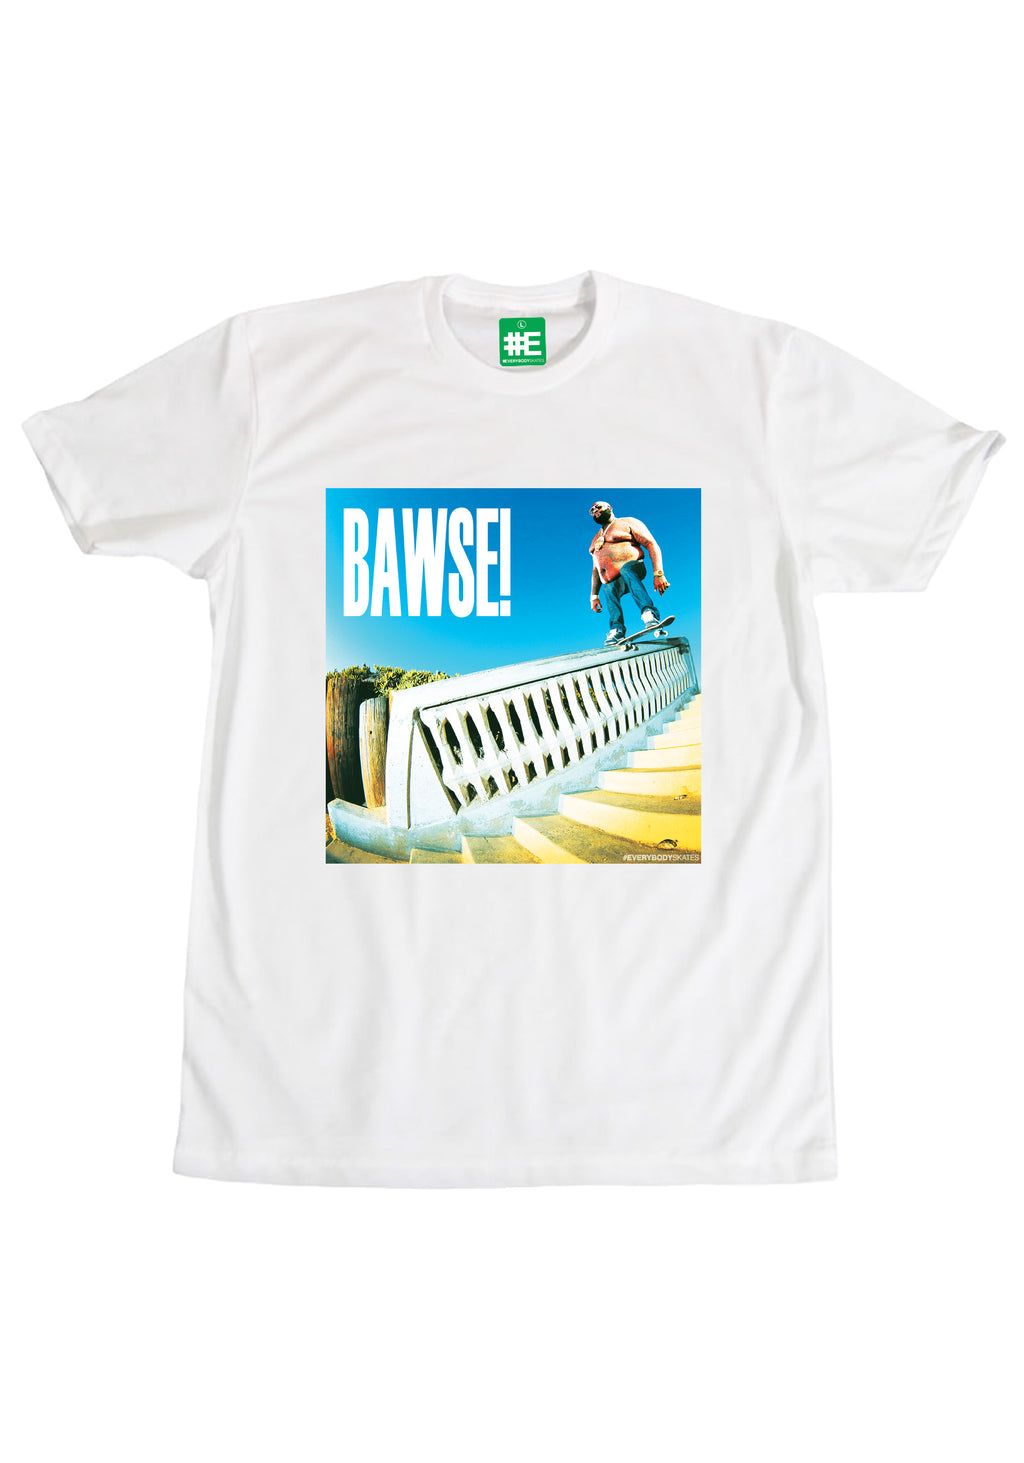 Bawse Graphic T-shirt